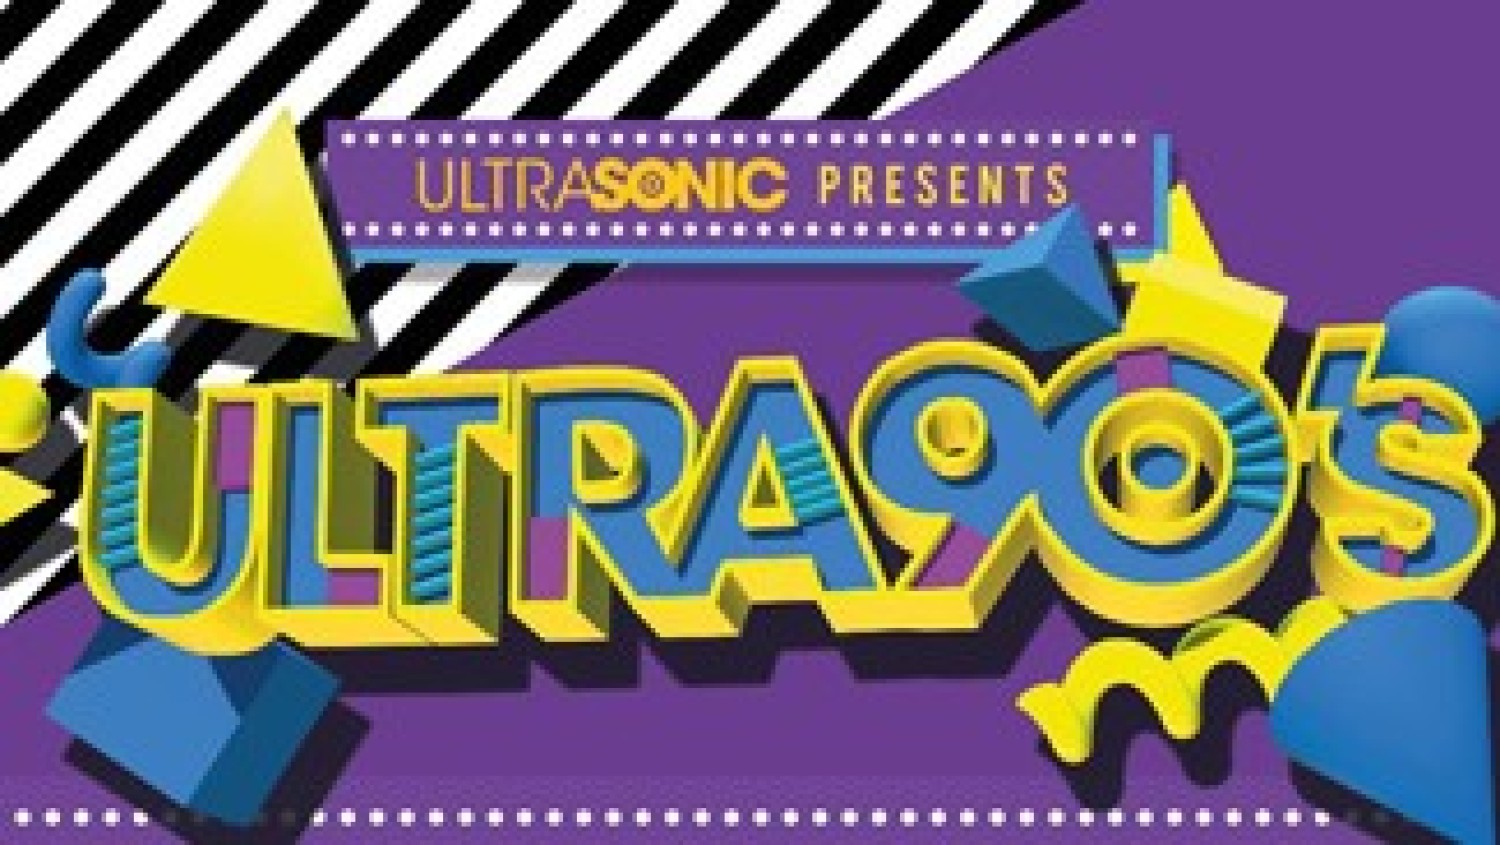 Party nieuws: 68% tickets Ultrasonic presents Ultra90's verkocht!